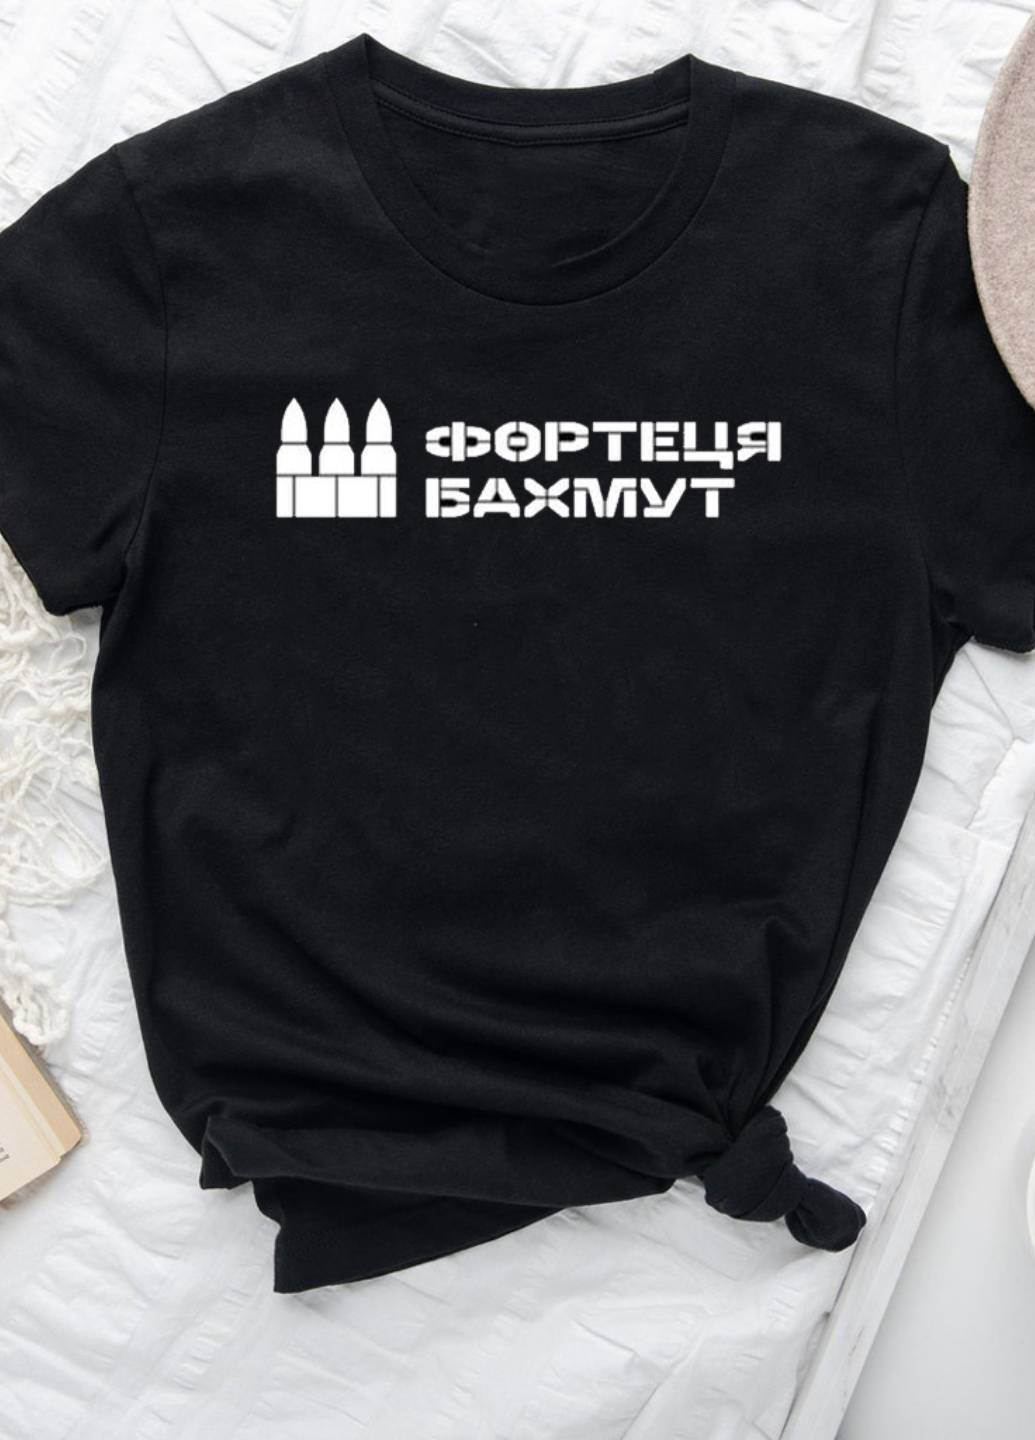 Чорна демісезон футболка жіноча чорна фортеця бахмут Love&Live